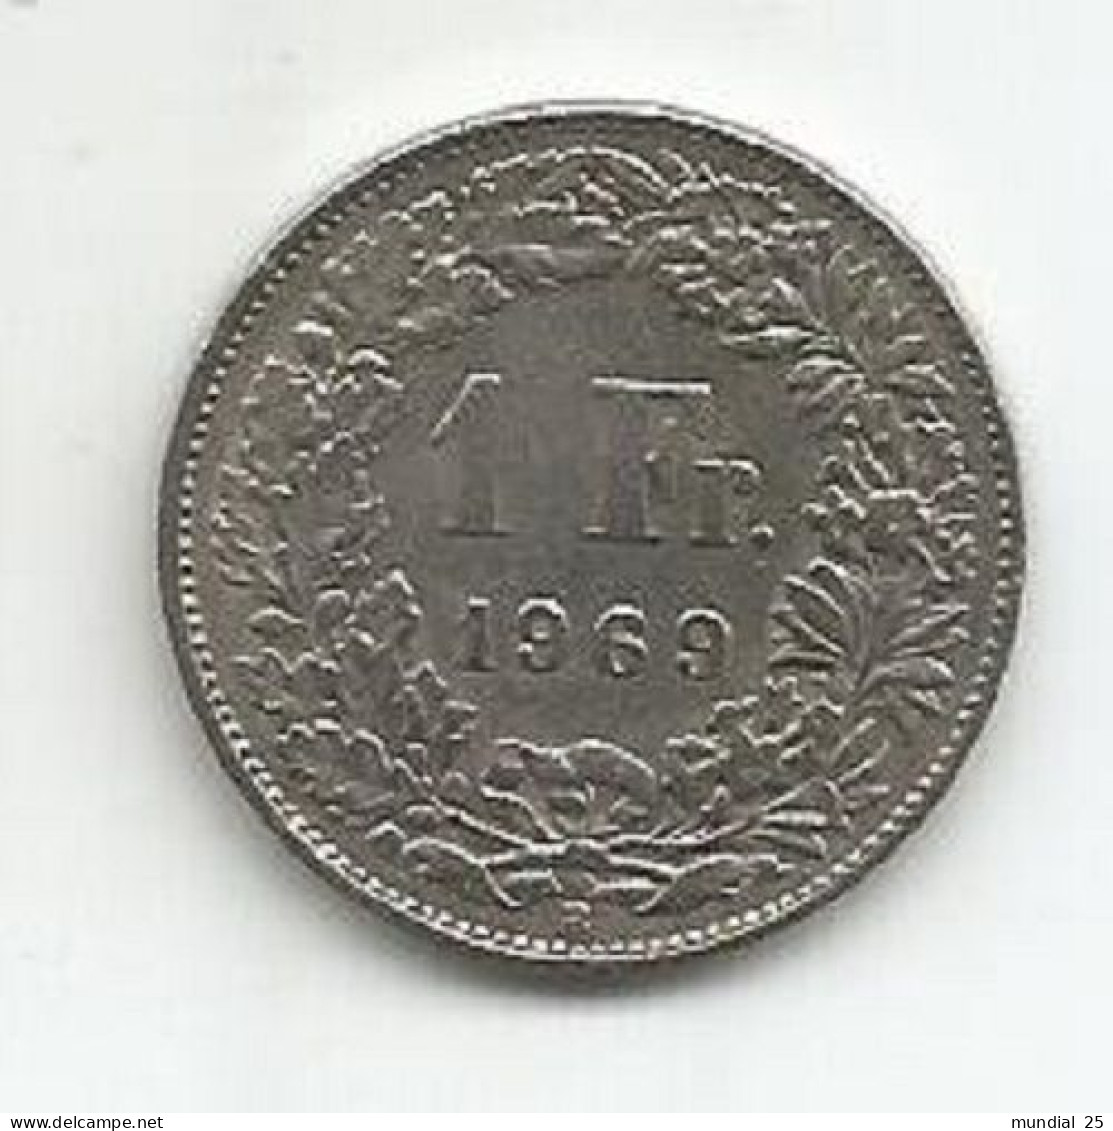 SWITZERLAND 1 FRANC 1969 B - 1 Franc